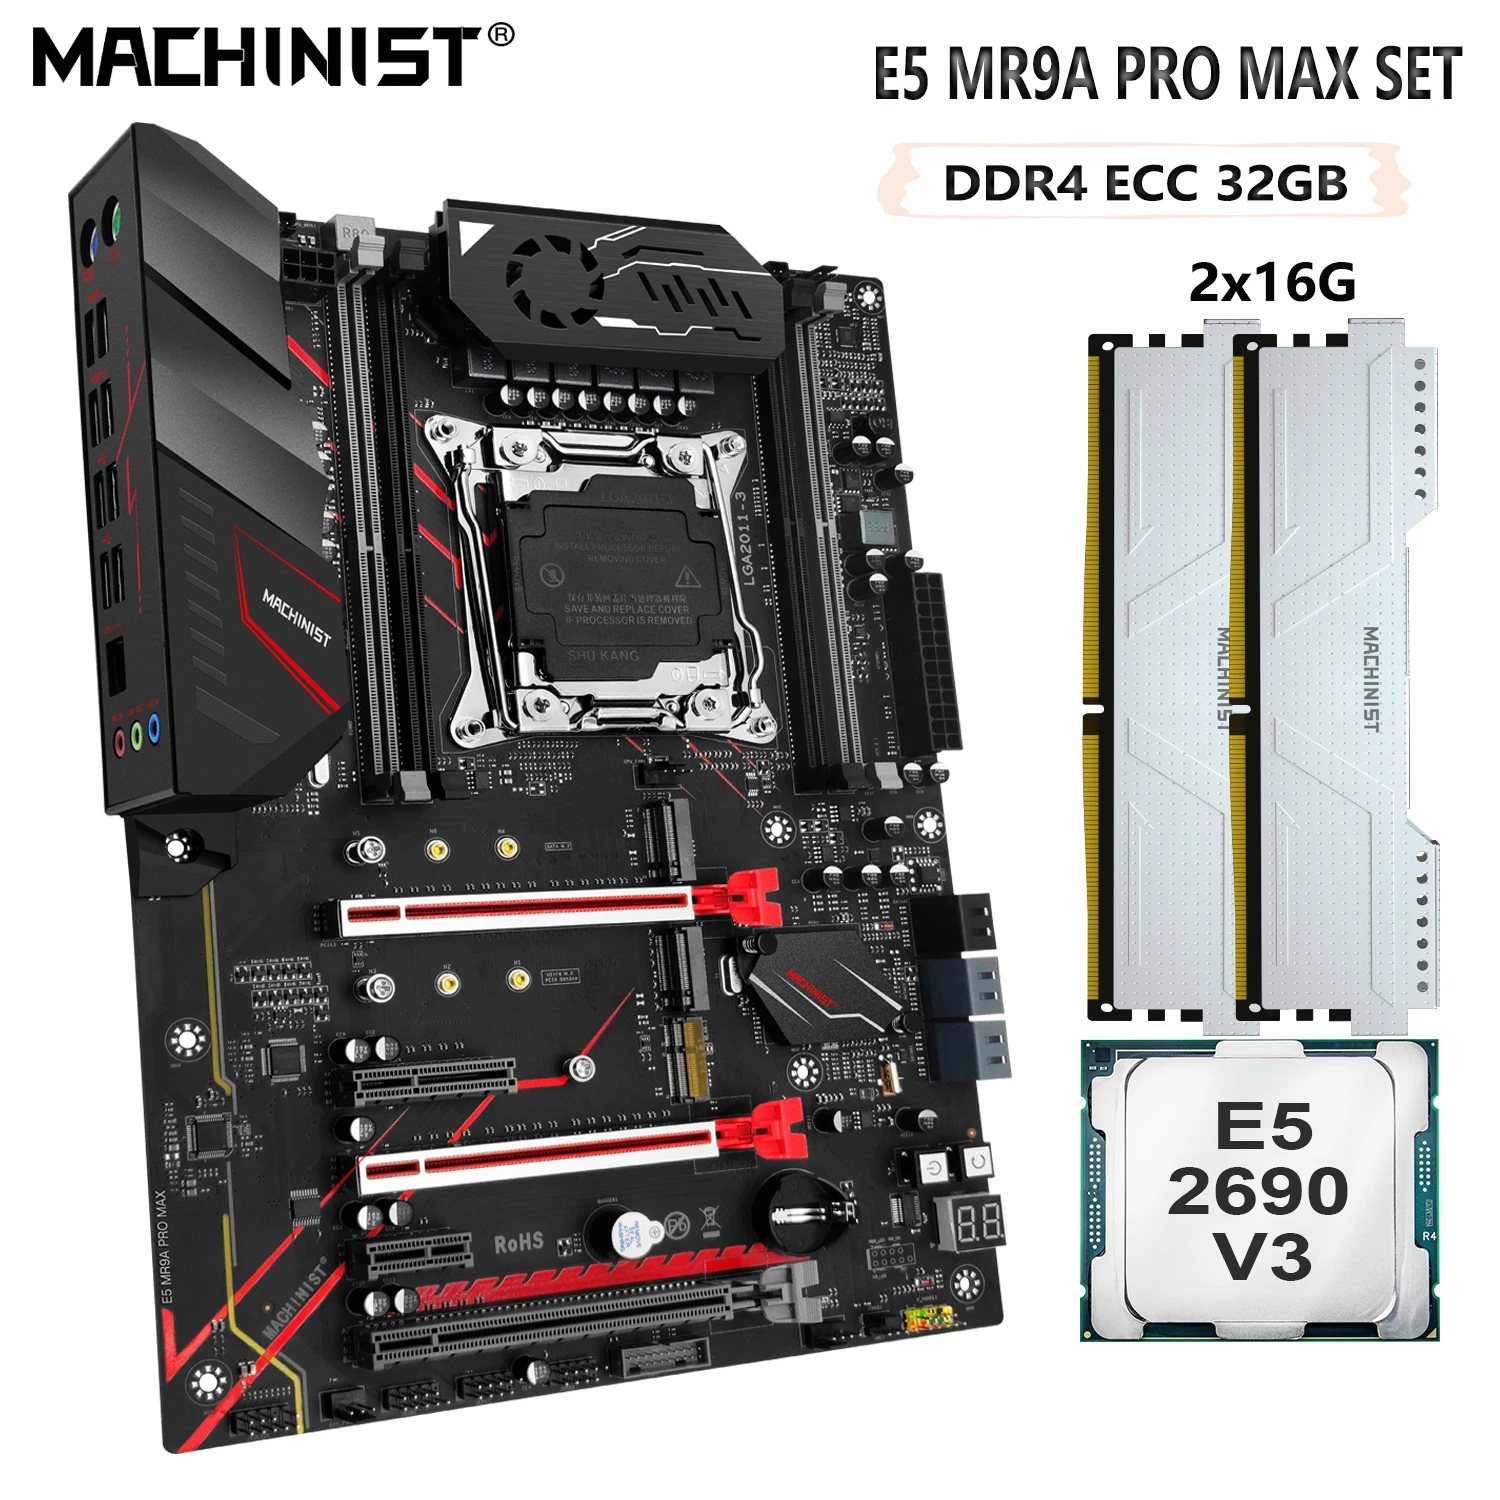 MACHINIST X99 Motherboard Set Kit Xeon E5 2690 V3 CPU Processor 2x16G DDR4 ECC RAM Memory Support SSD Sata M.2  MR9A PRO MAX